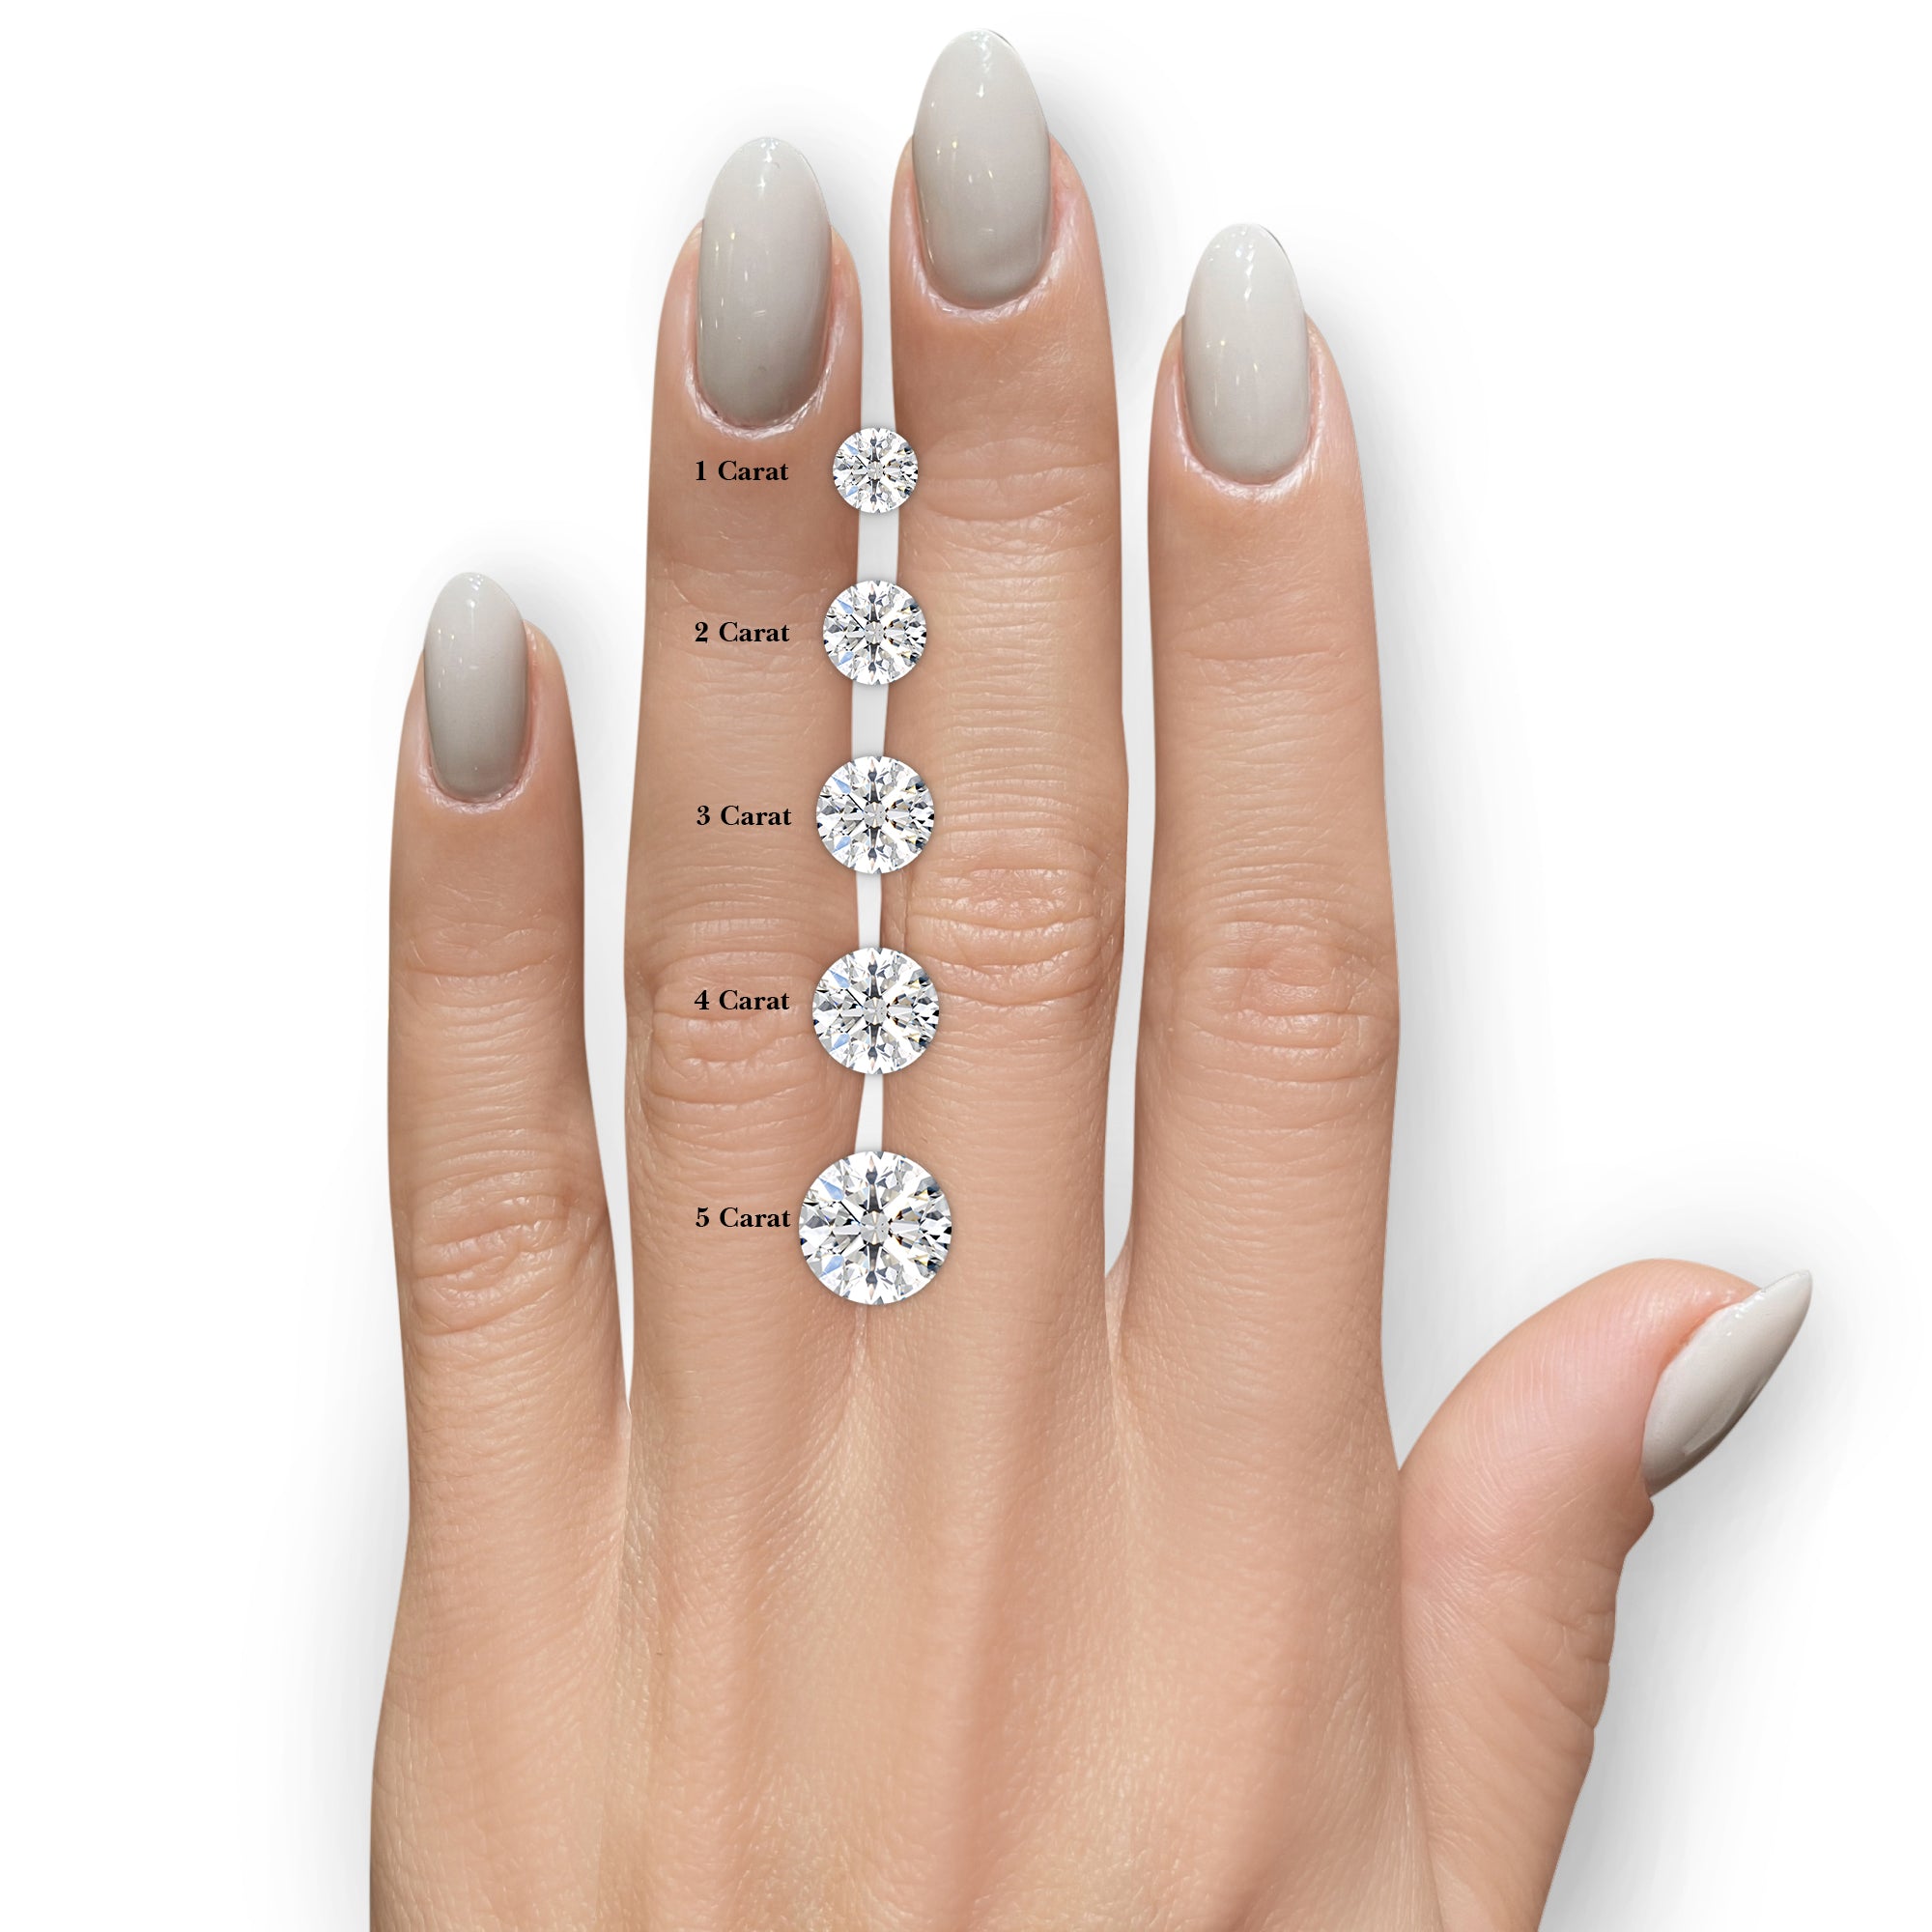 Addison Moissanite & Diamonds Ring -18K White Gold